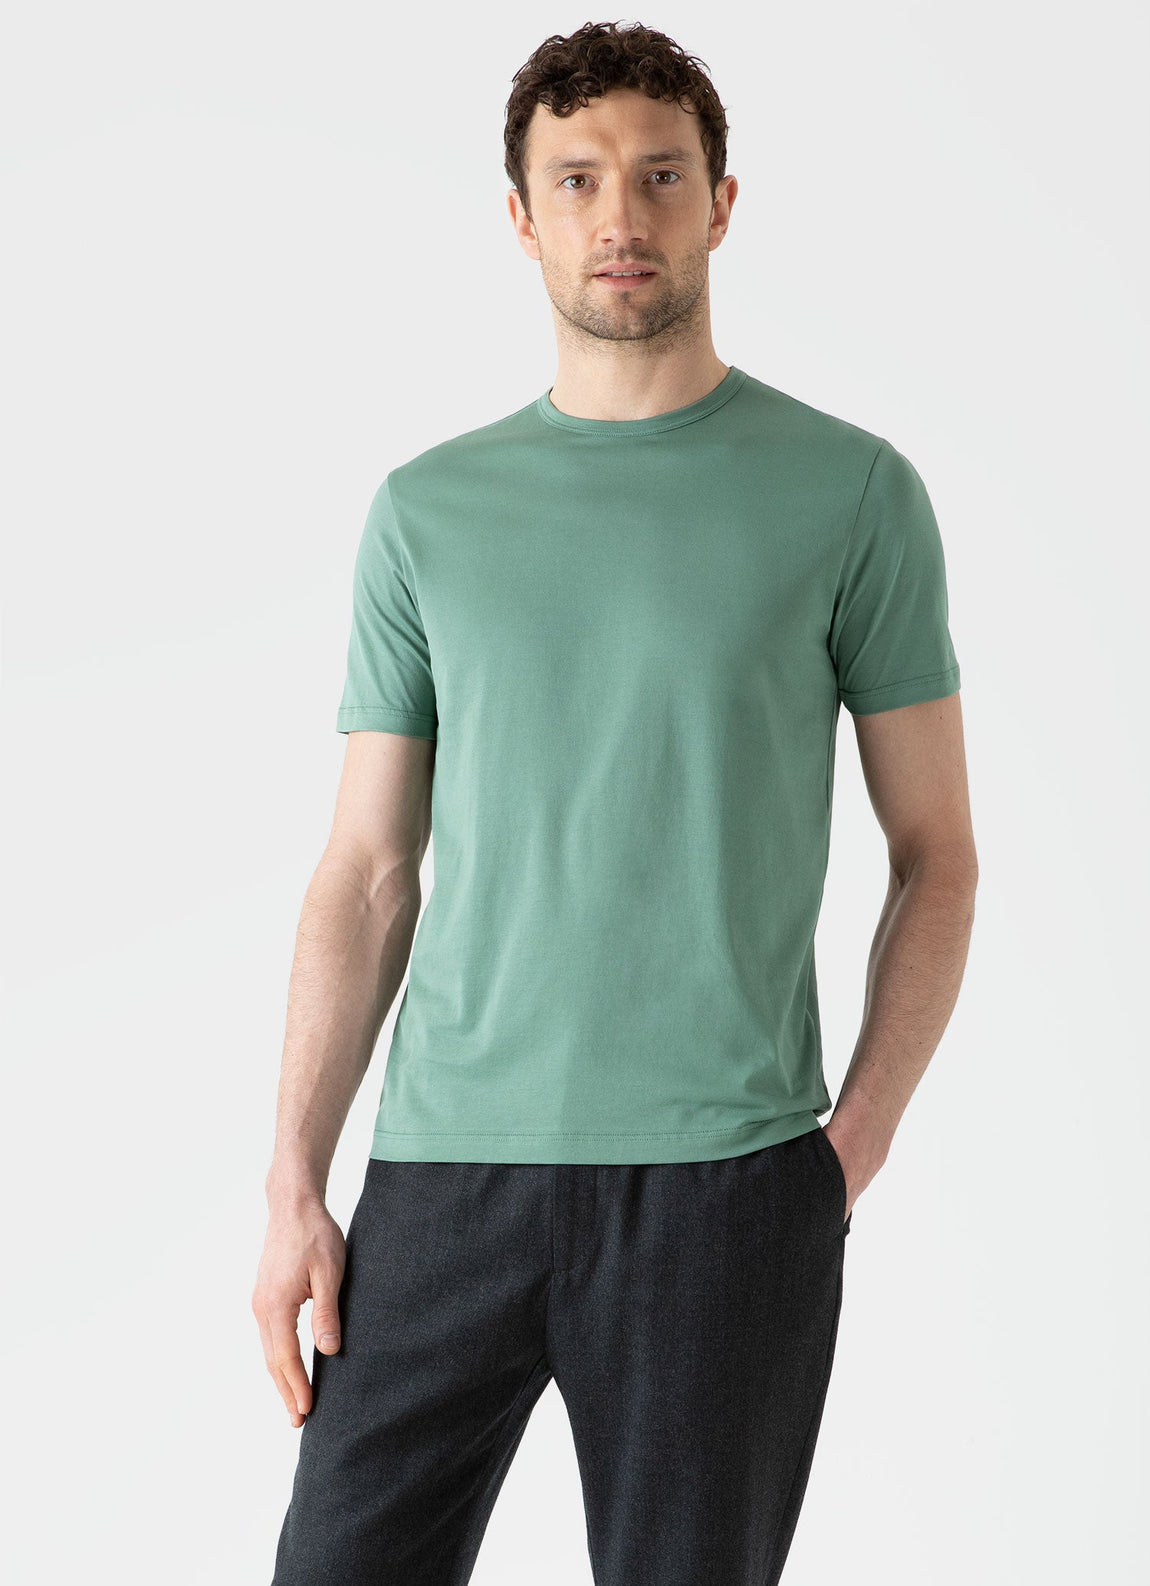 Men's Classic T-shirt in Light Pine